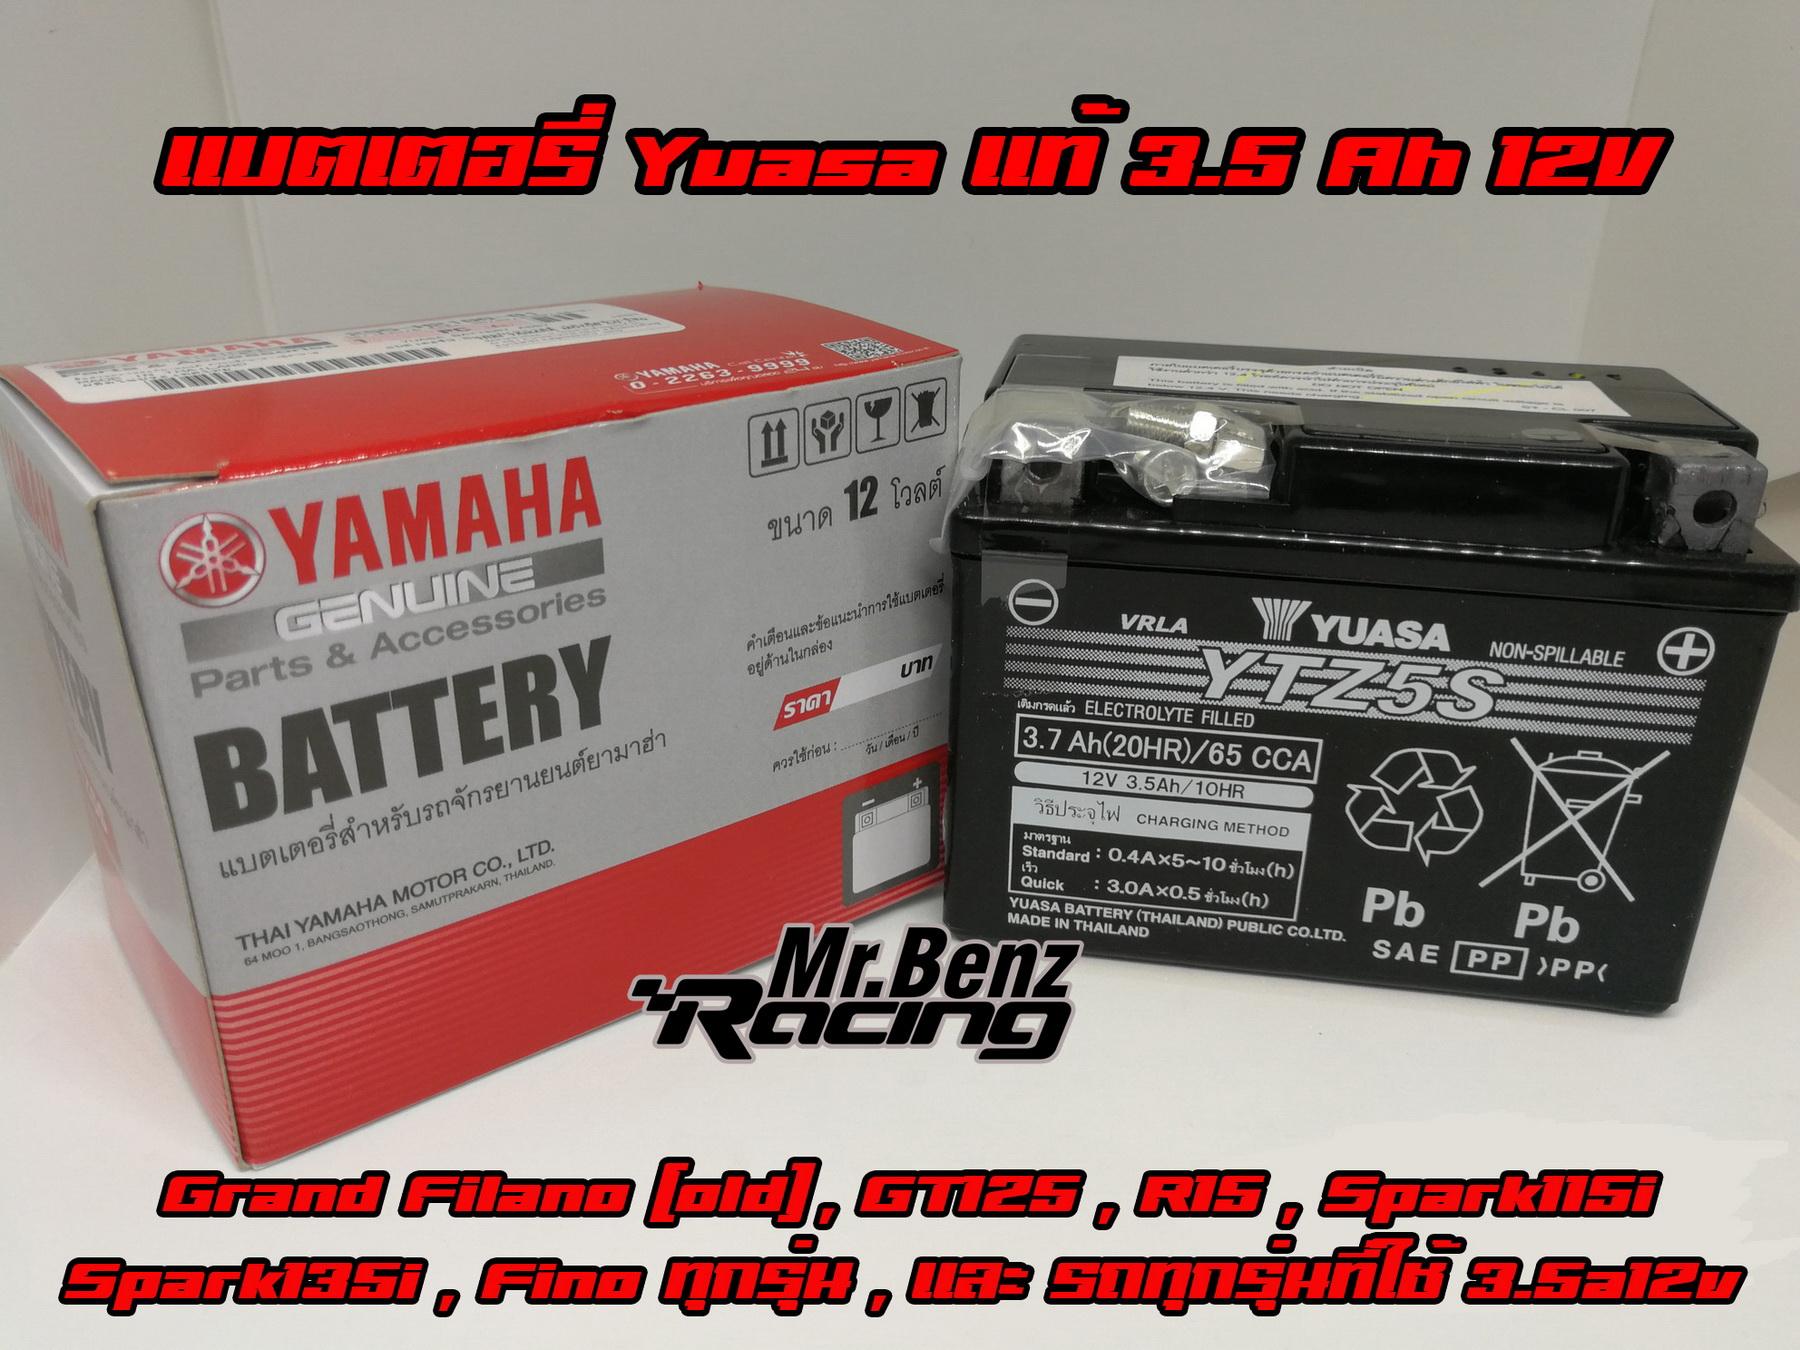 Yamaha Genuine Yuasa แบตเตอรี่ แห้ง Battery ( 3.5A12V ) Grand Filano (ตัวเก่า) , GT125 , R15 , Finn , Spark115i , Spark135i , Fino ทุกรุ่น , Nouvo135